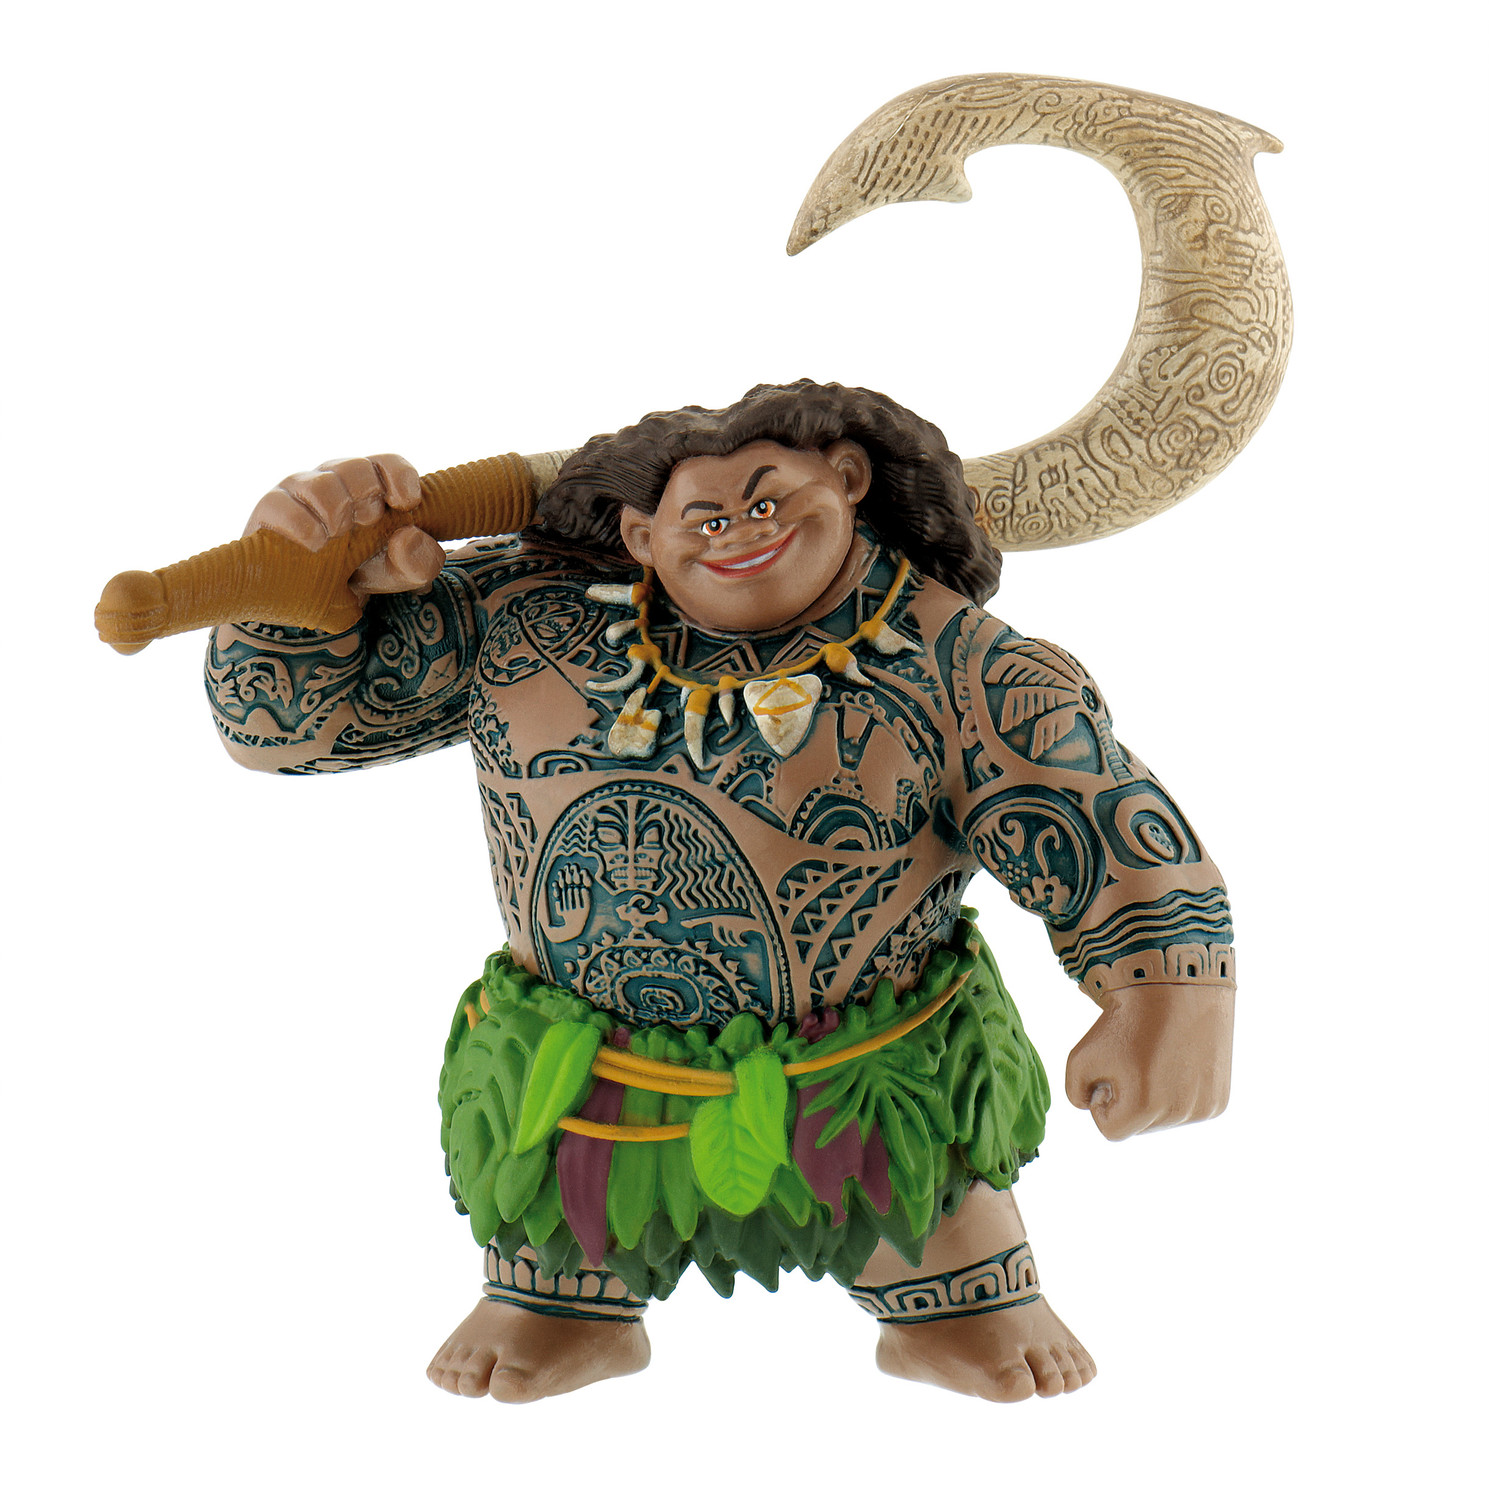 Bullyland 13186 - Halbgott Maui, Spielfigur